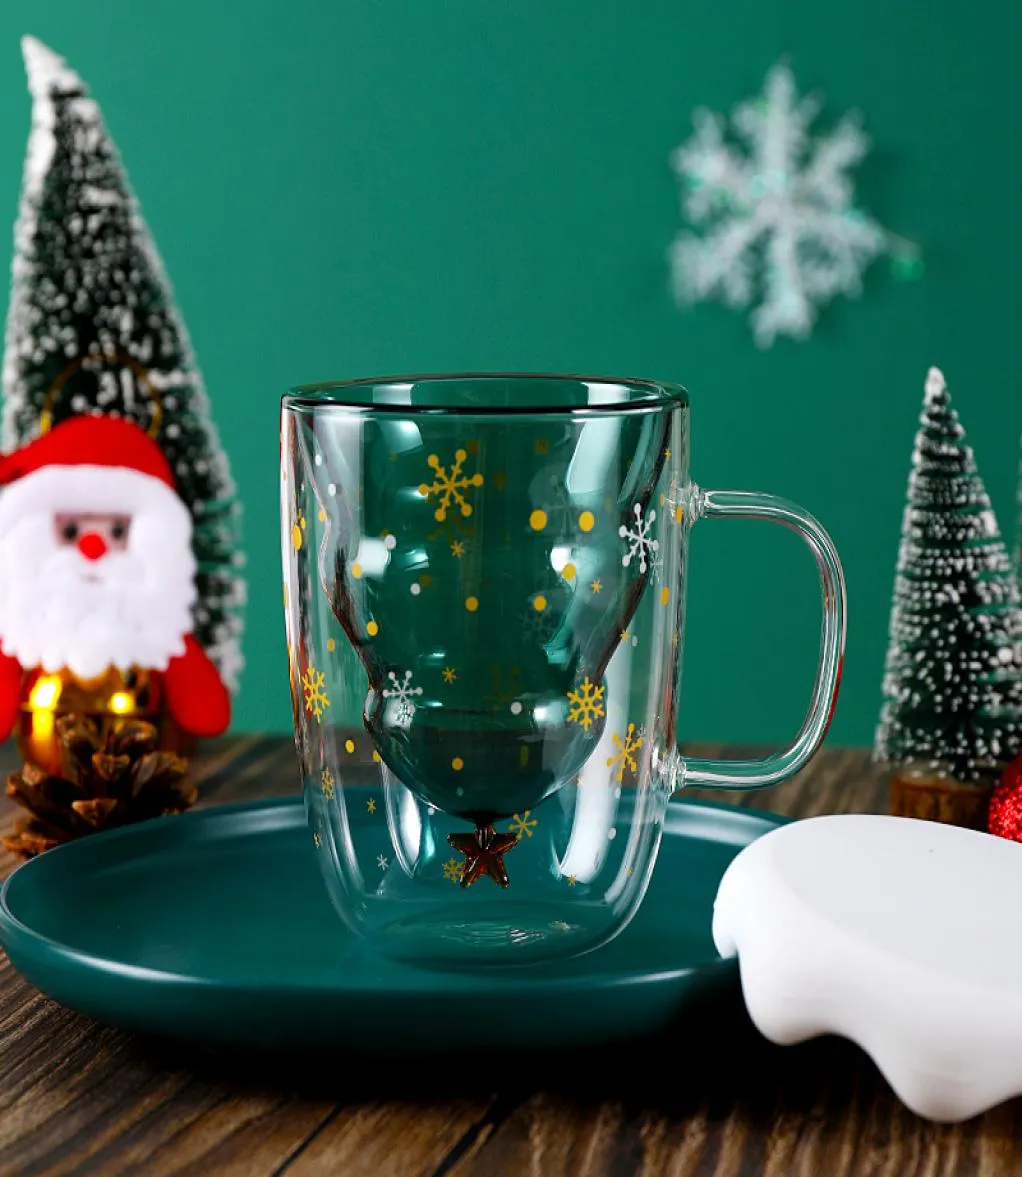 8oz s Kerst Evenement Cup Kerstboom Koffie Mok Thee Mok Hoge Kwaliteit Borosilicaatglas Dubbeldekker Cup2681460